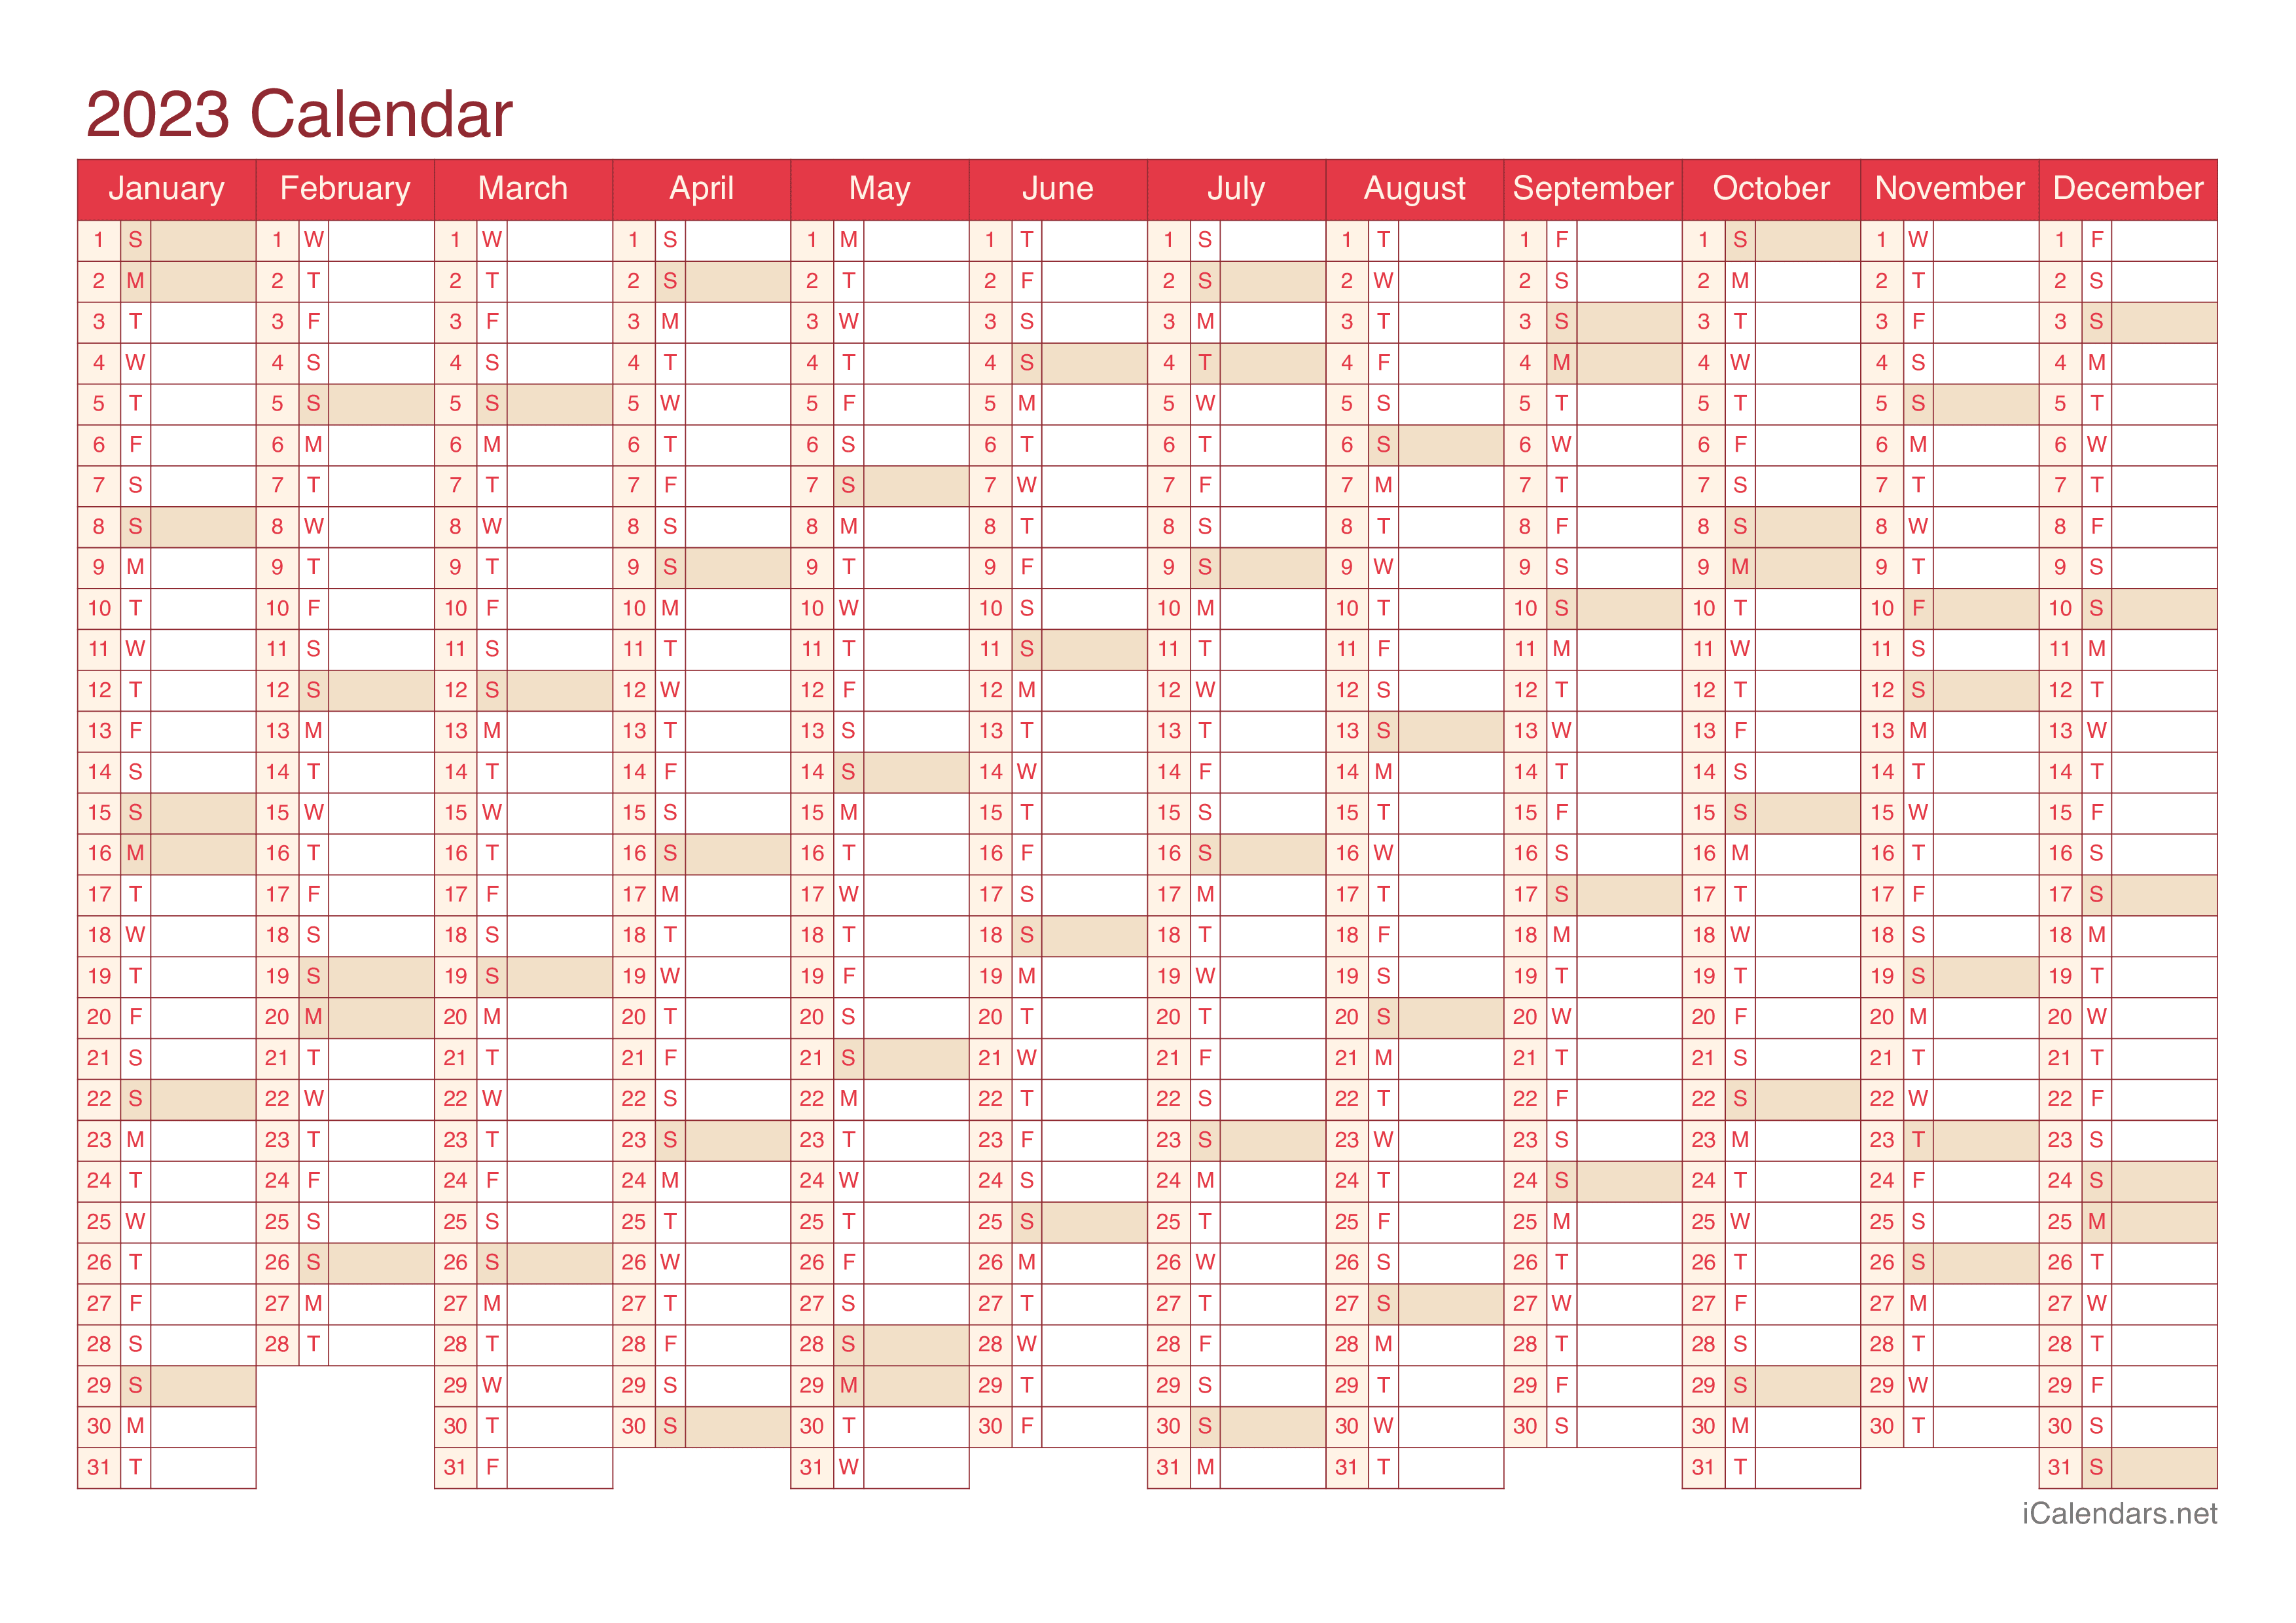 2023 Calendar - Cherry